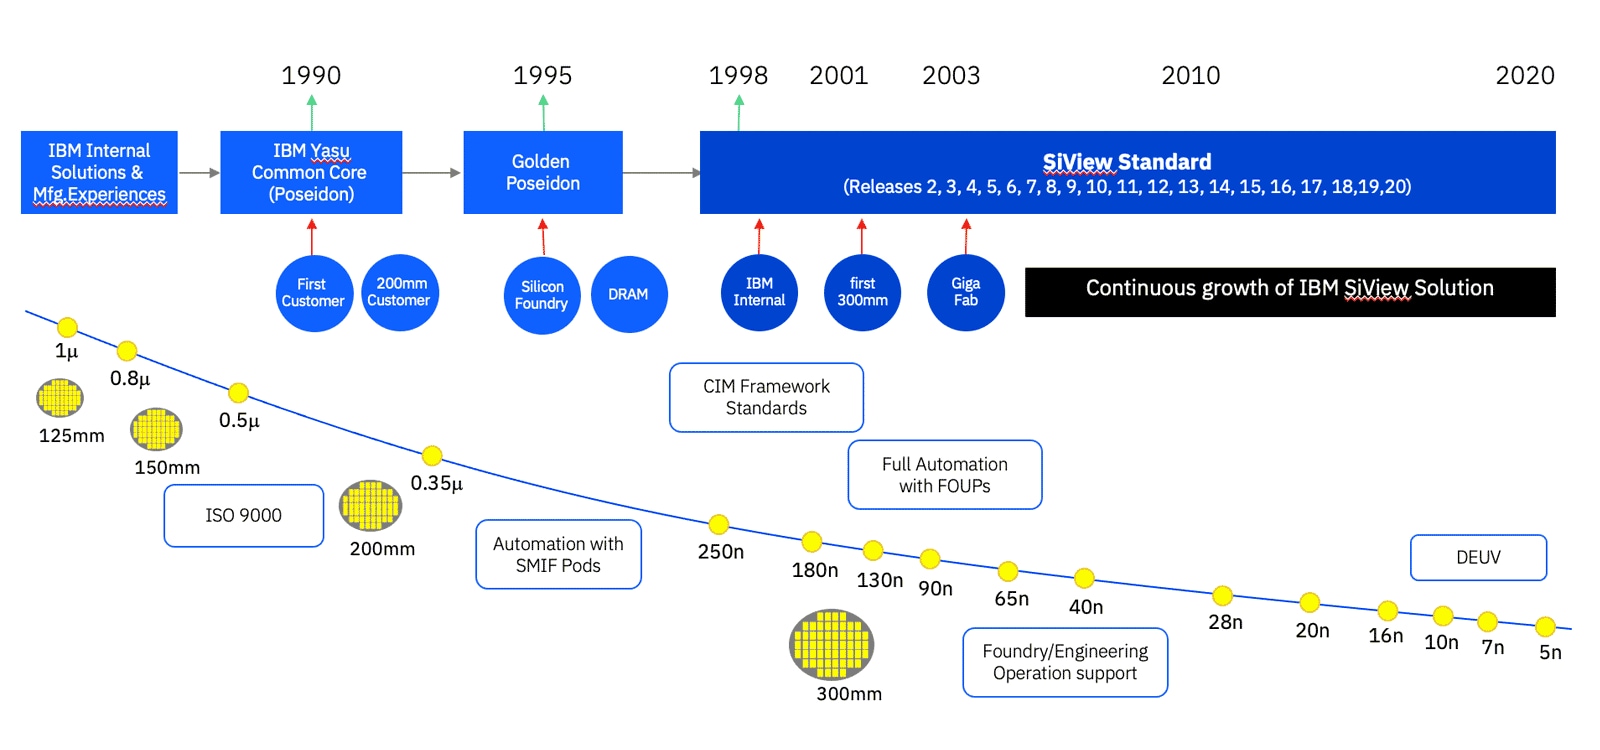 IBM SiView Standardの継続的な機能拡張